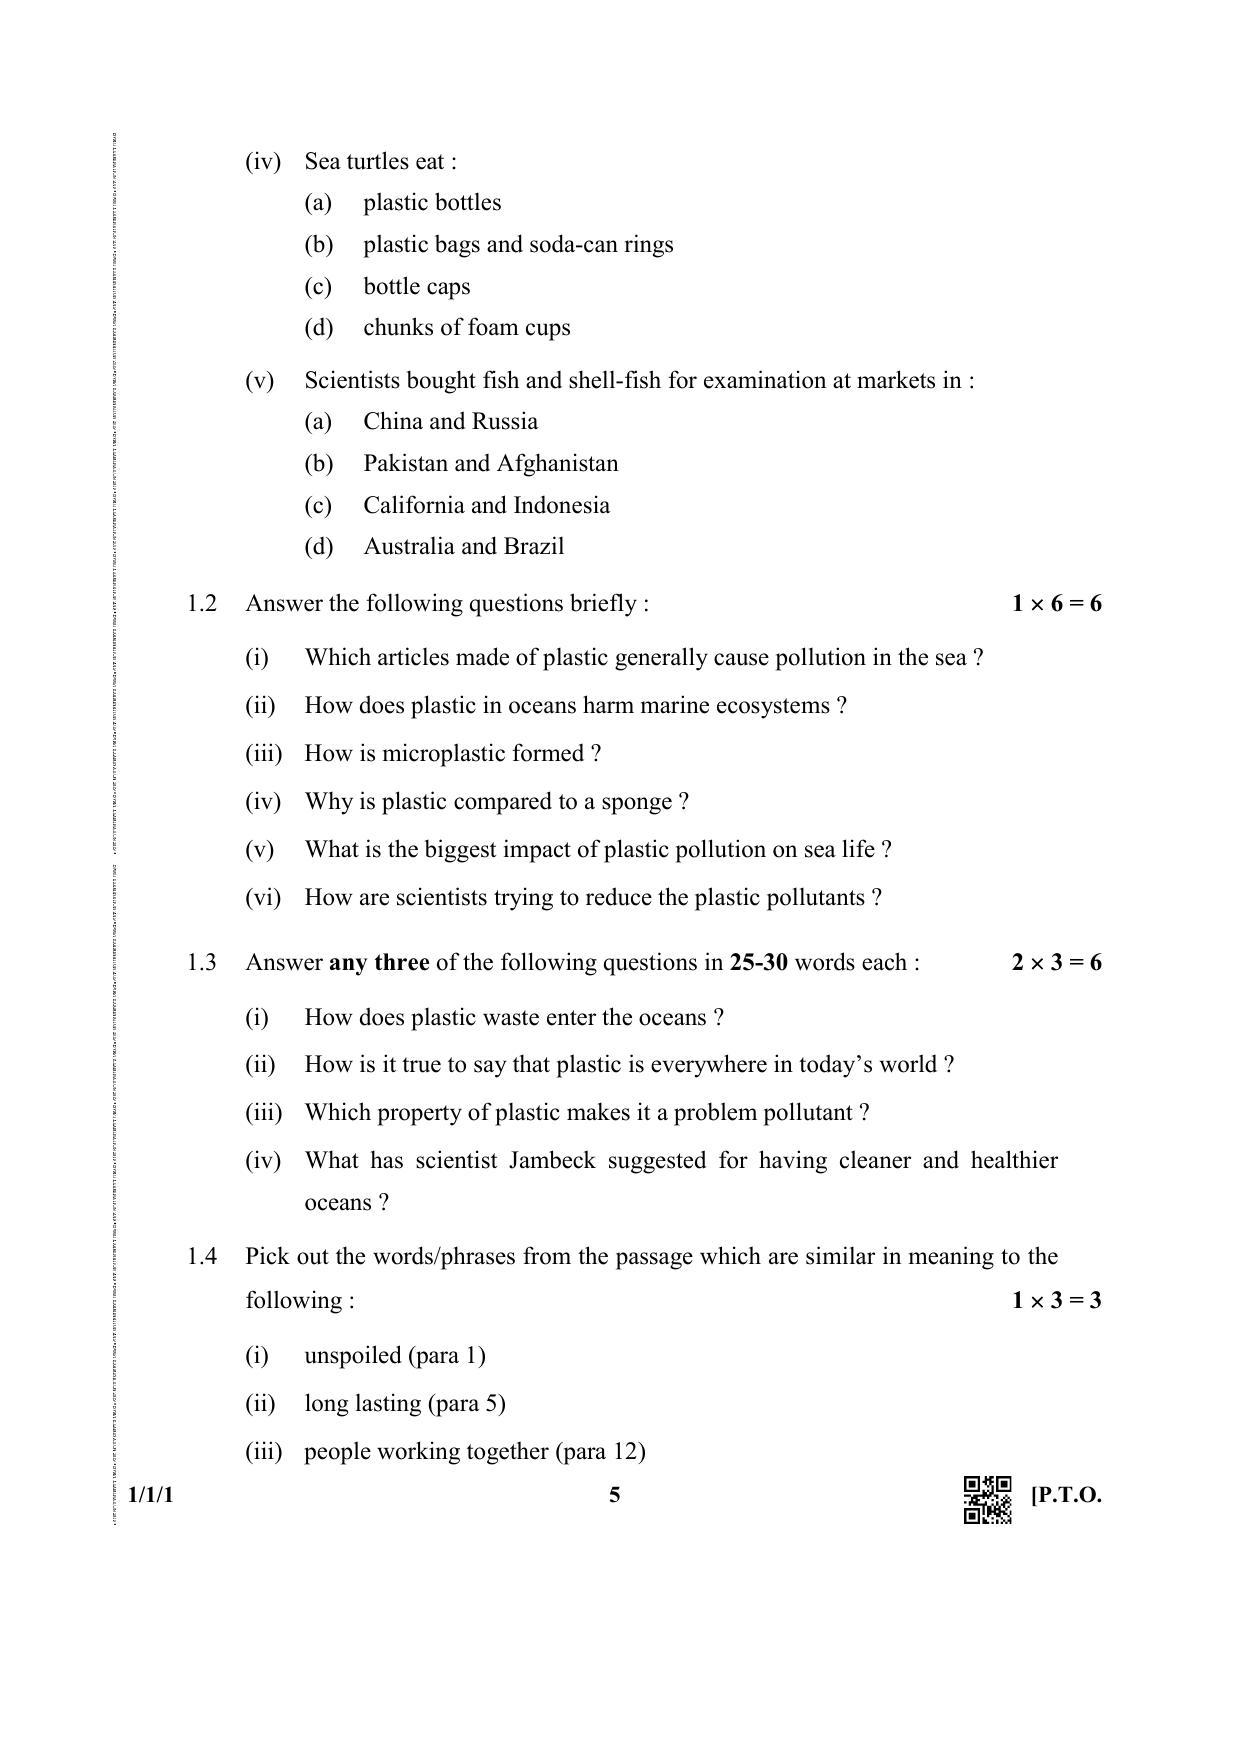 CBSE Class 12 1-1-1 (English Core) 2019 Question Paper - Page 5